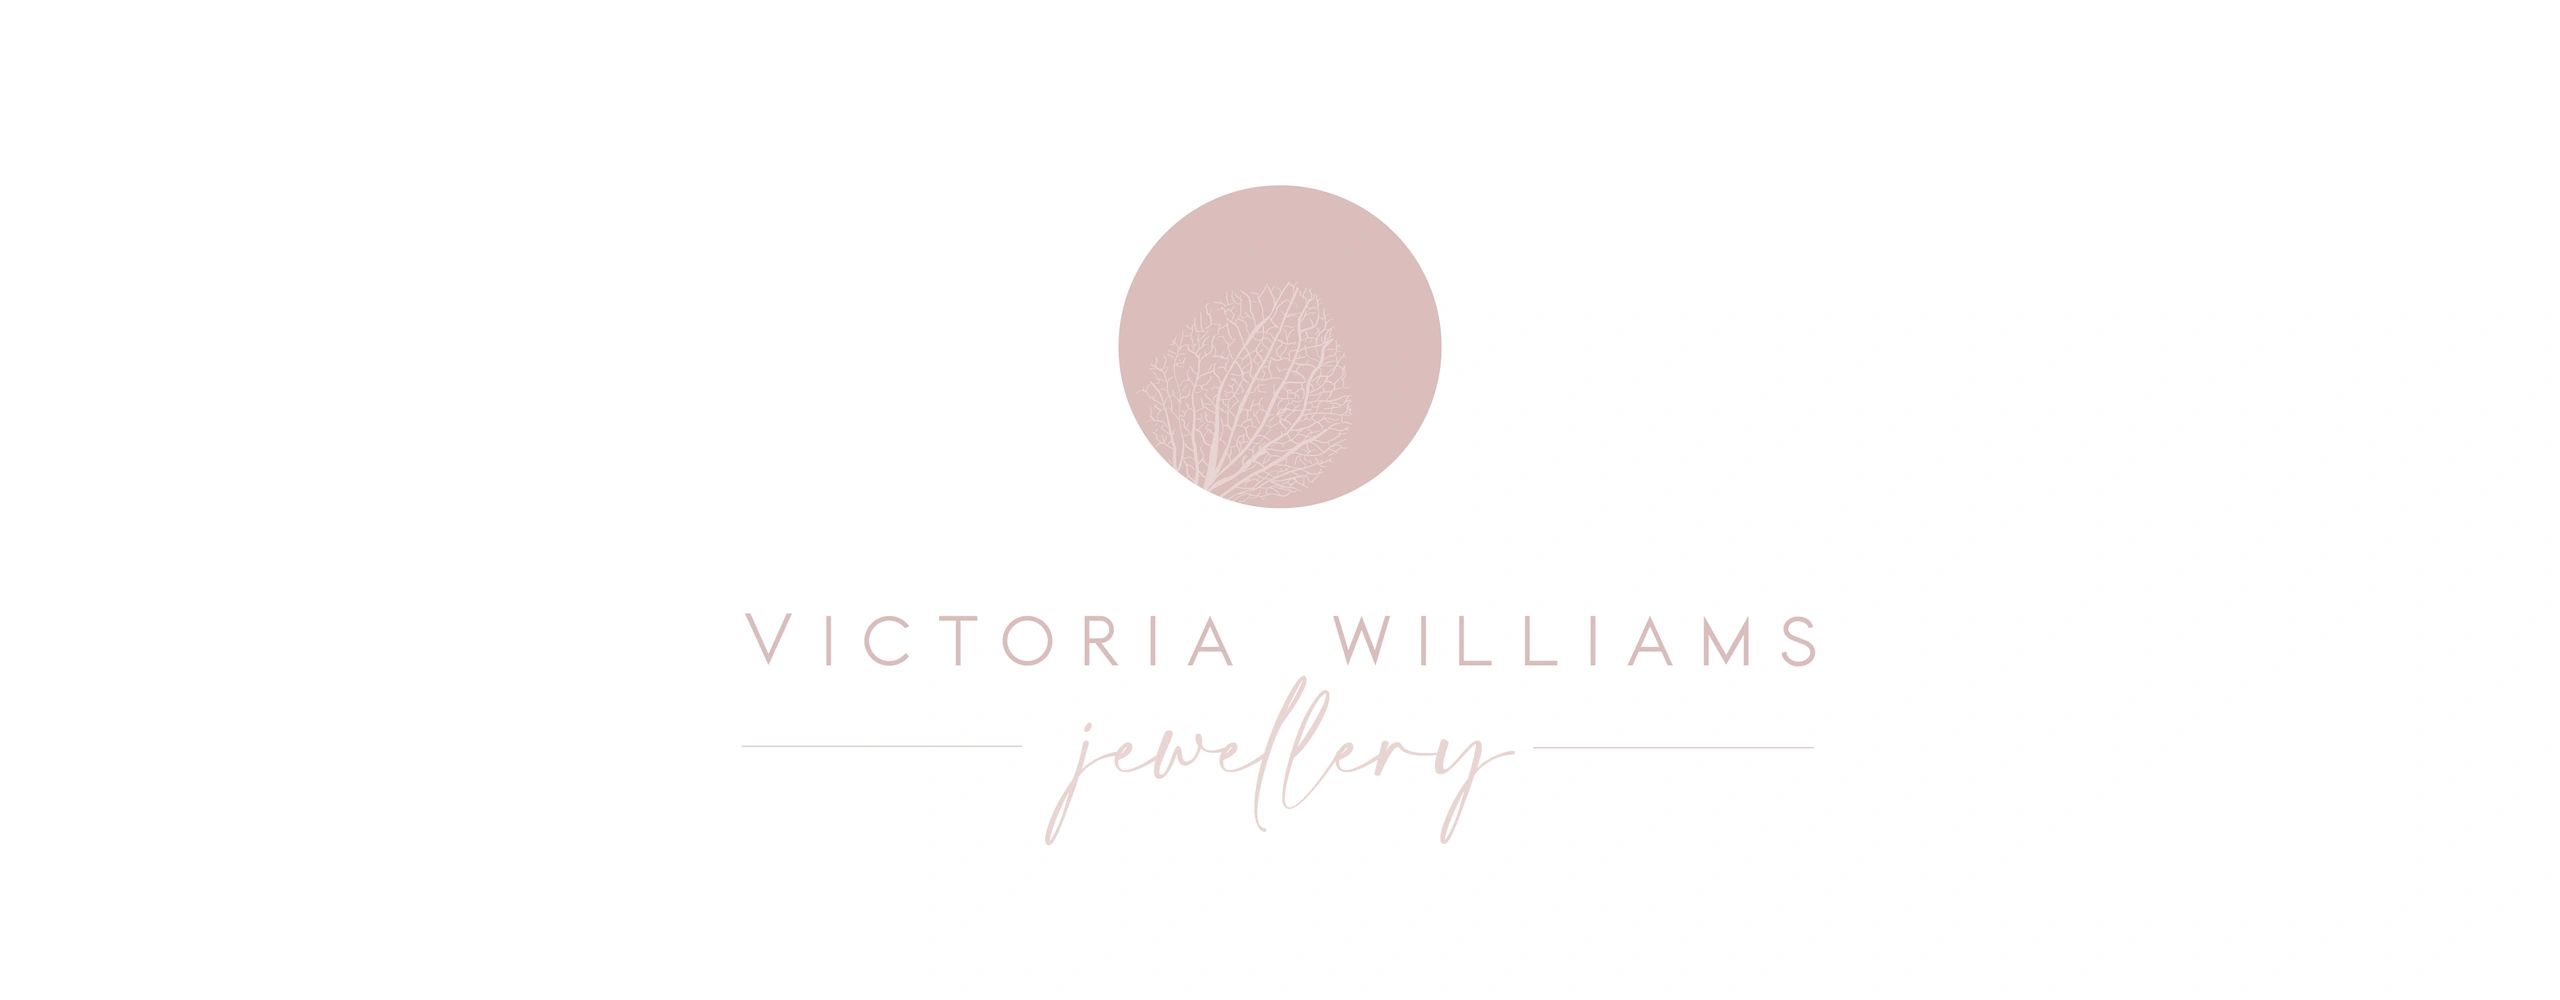 Victoria Williams Jewellery logo with outline of hydrangea skeleton petal.